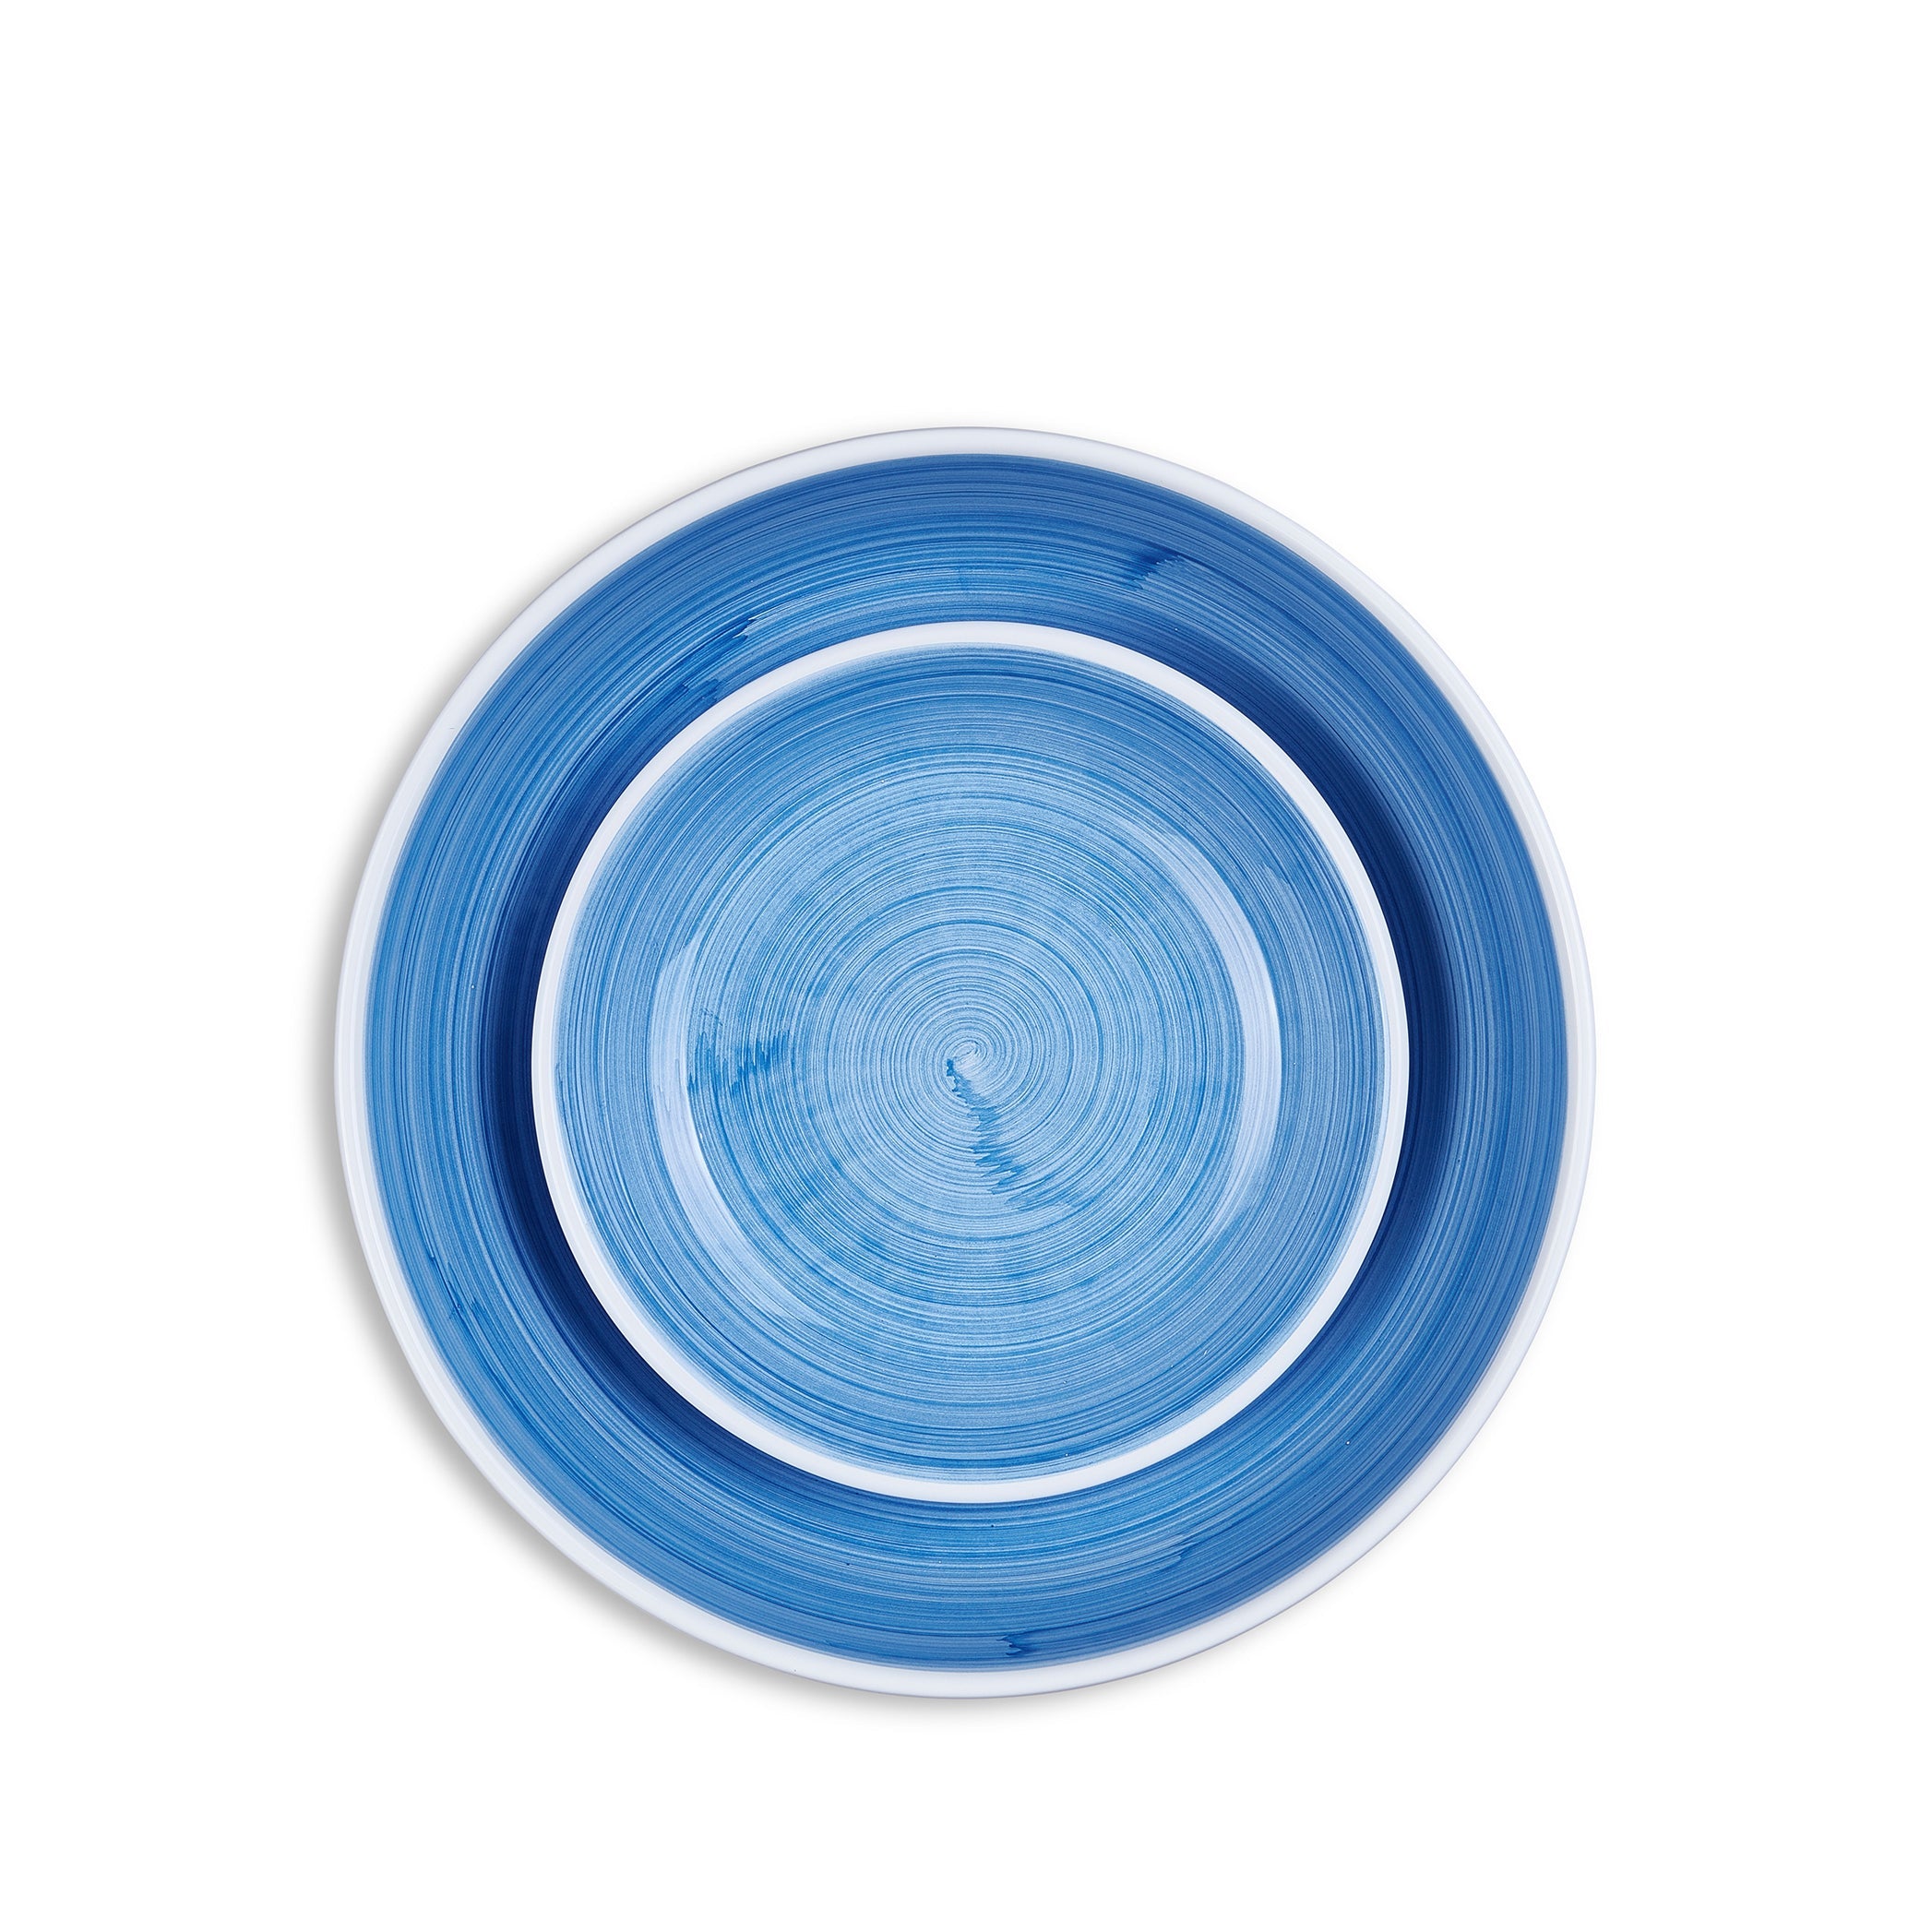 S&B 'Brushed' Ceramic Pasta Bowl in Light Blue, 22cm